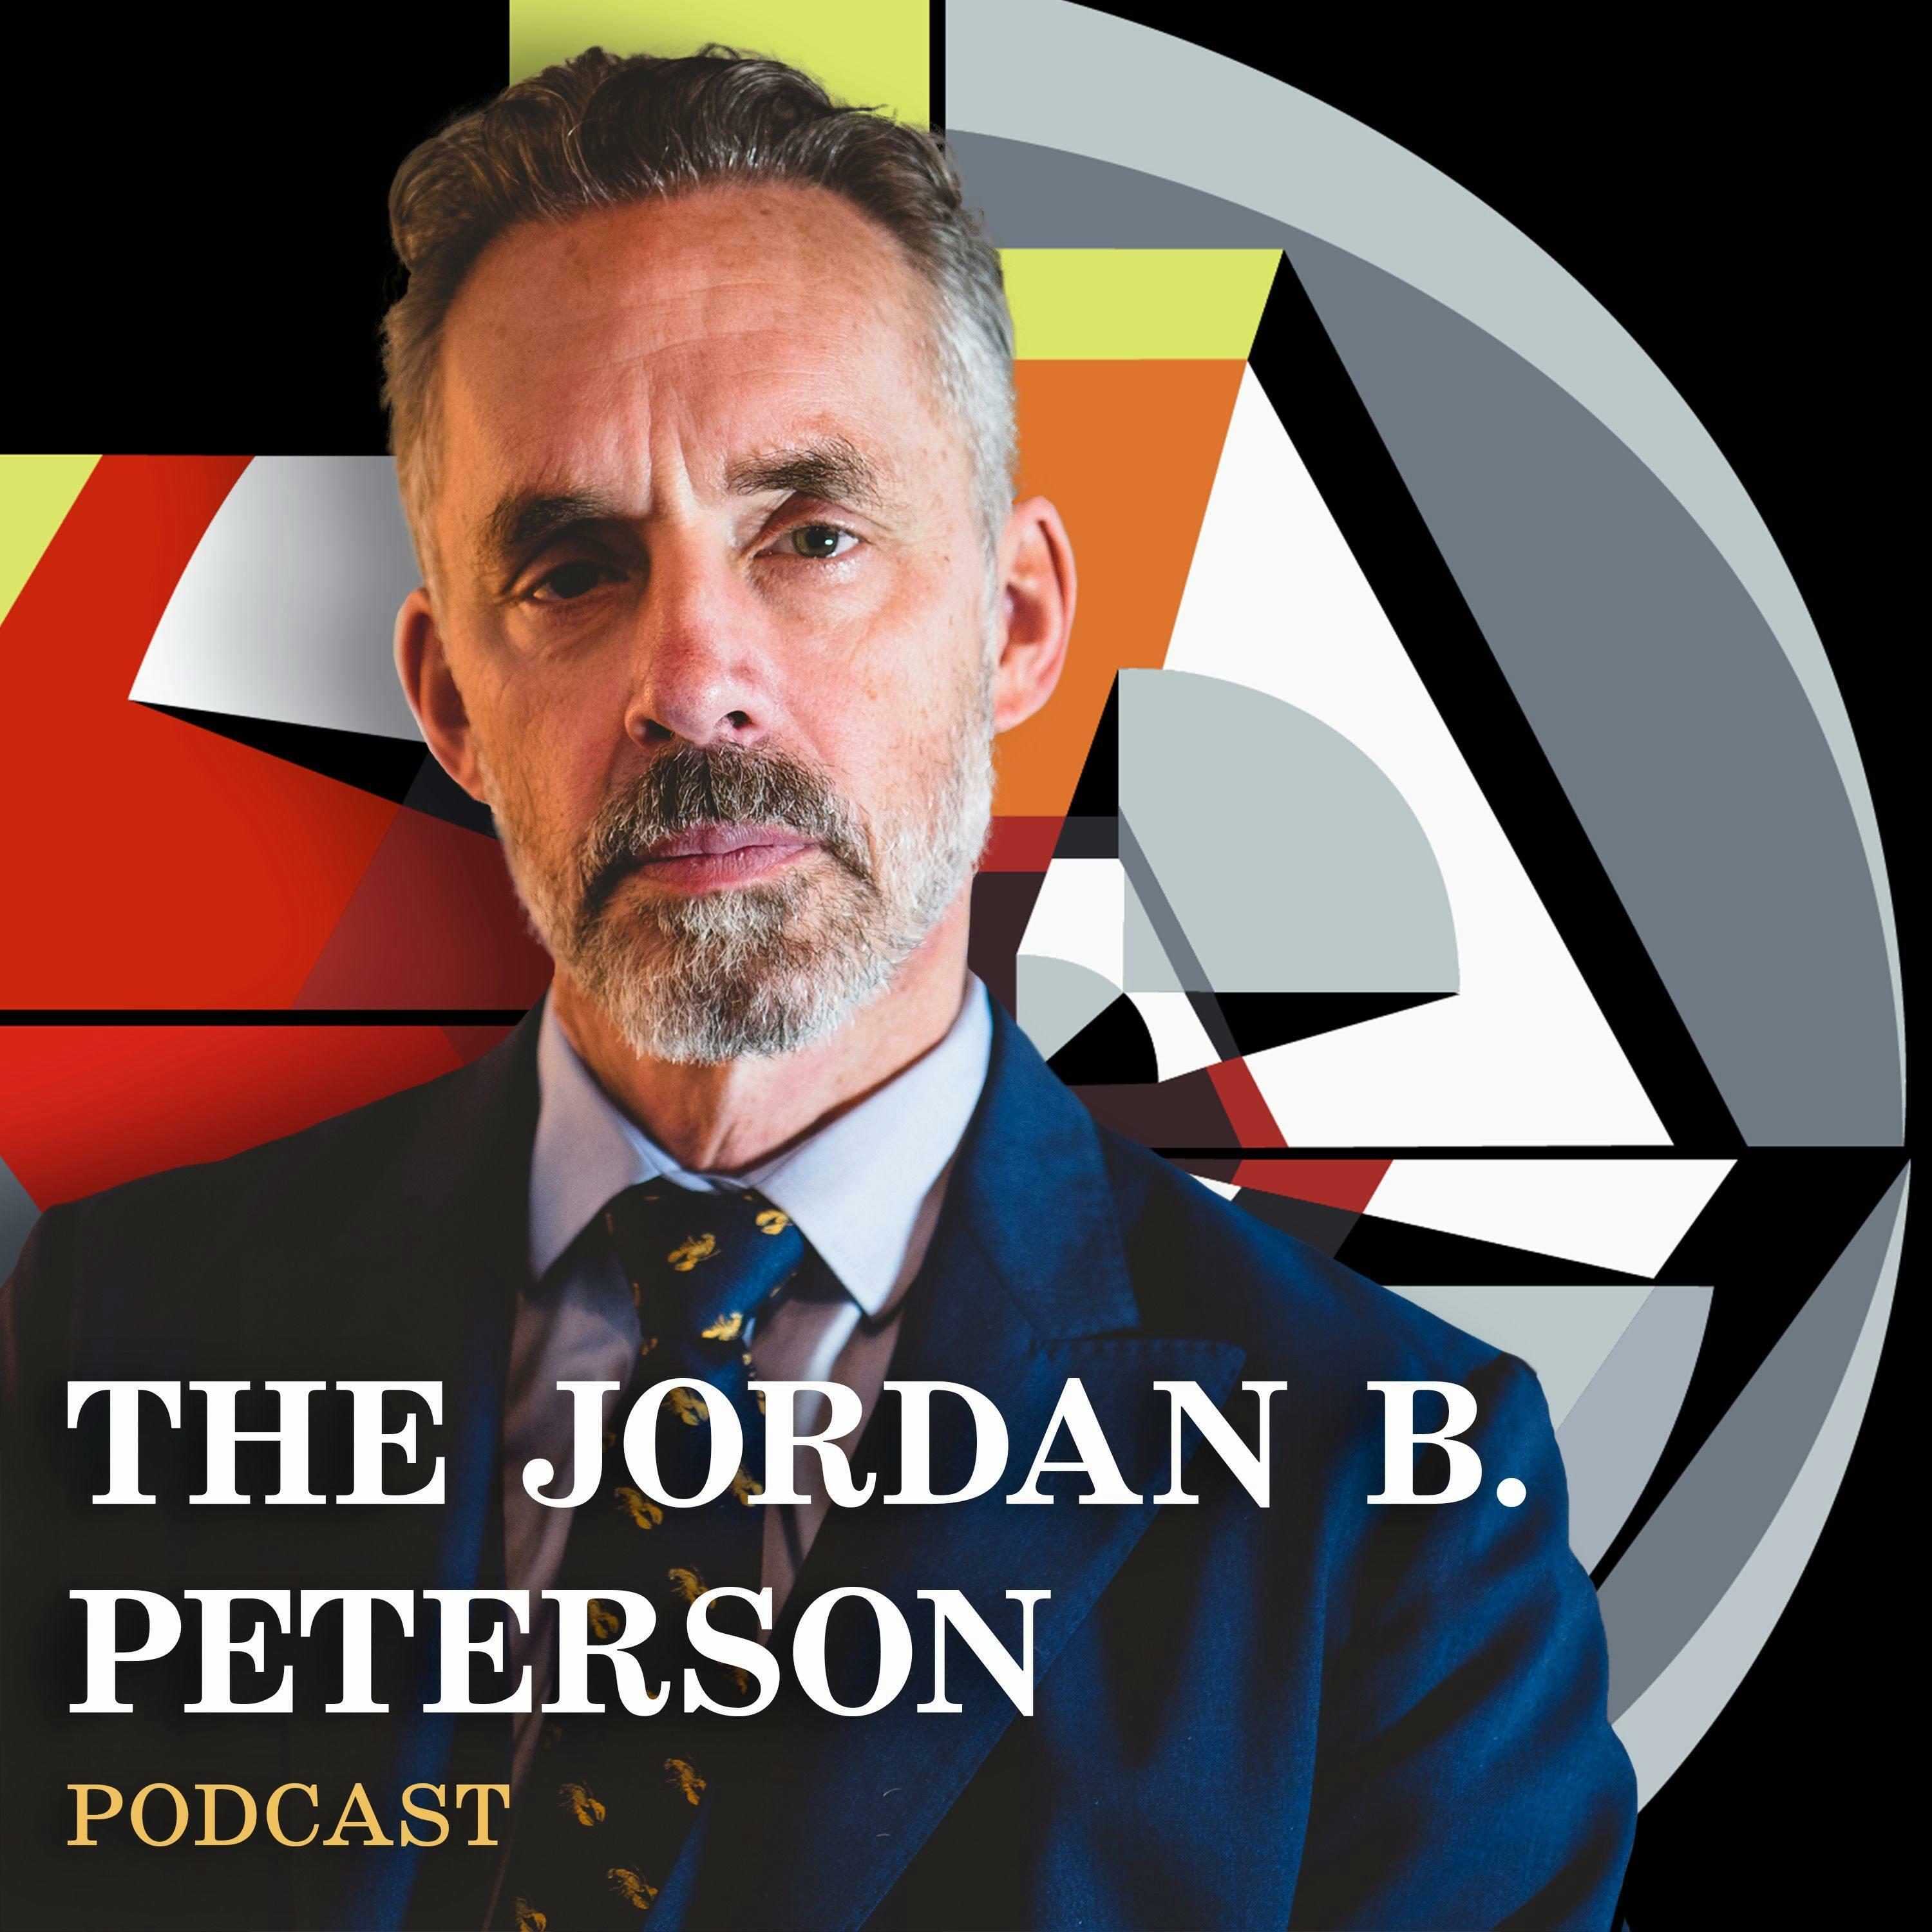 The Jordan B. Peterson Podcast iHeart